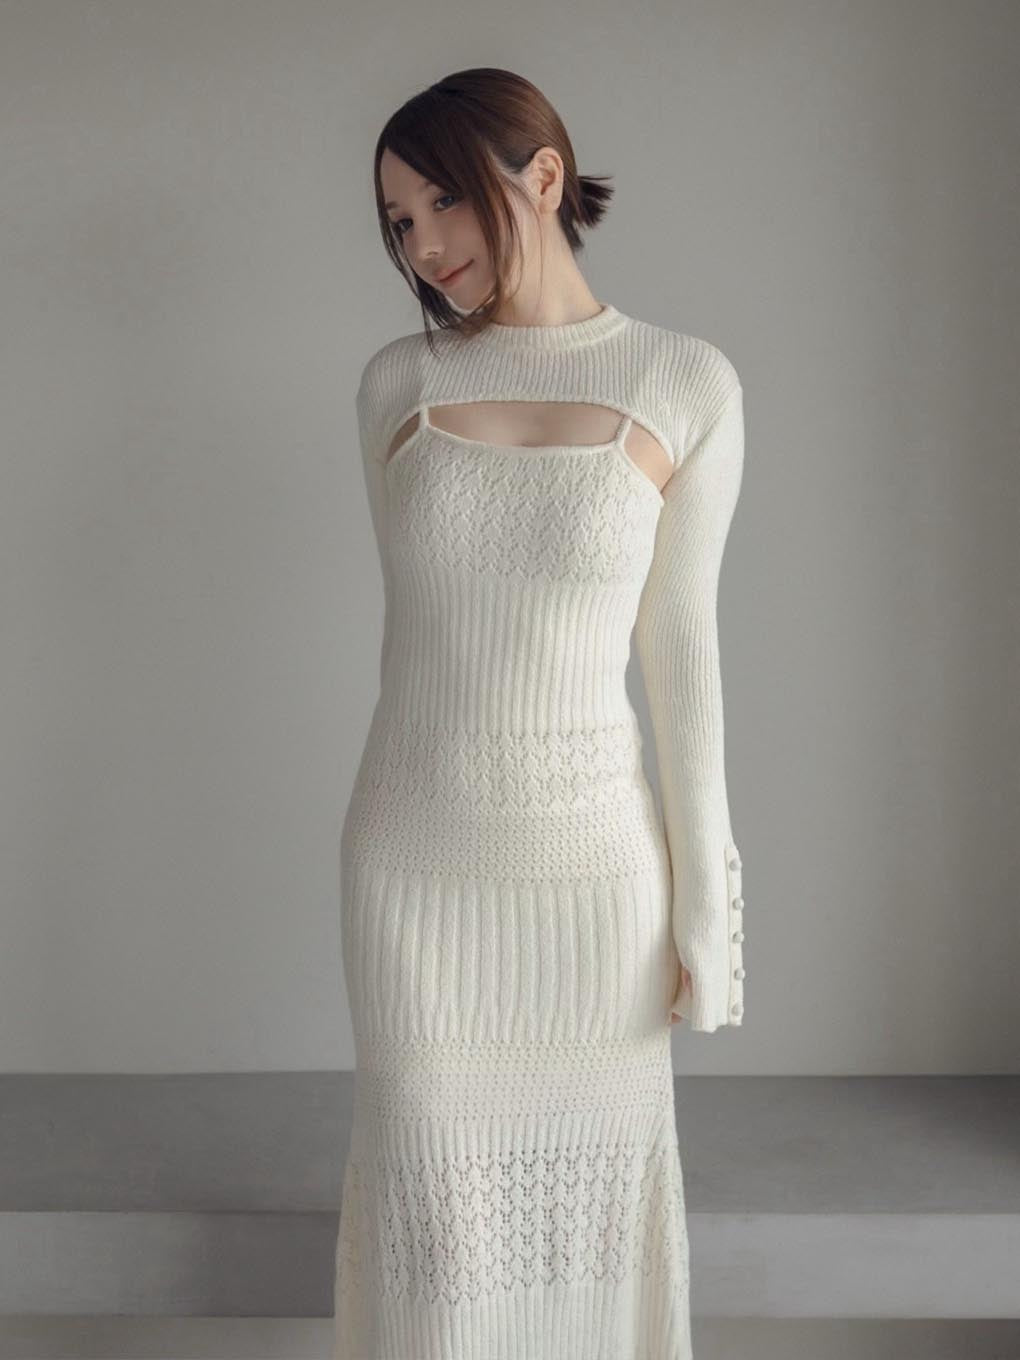 Layered crochet dress